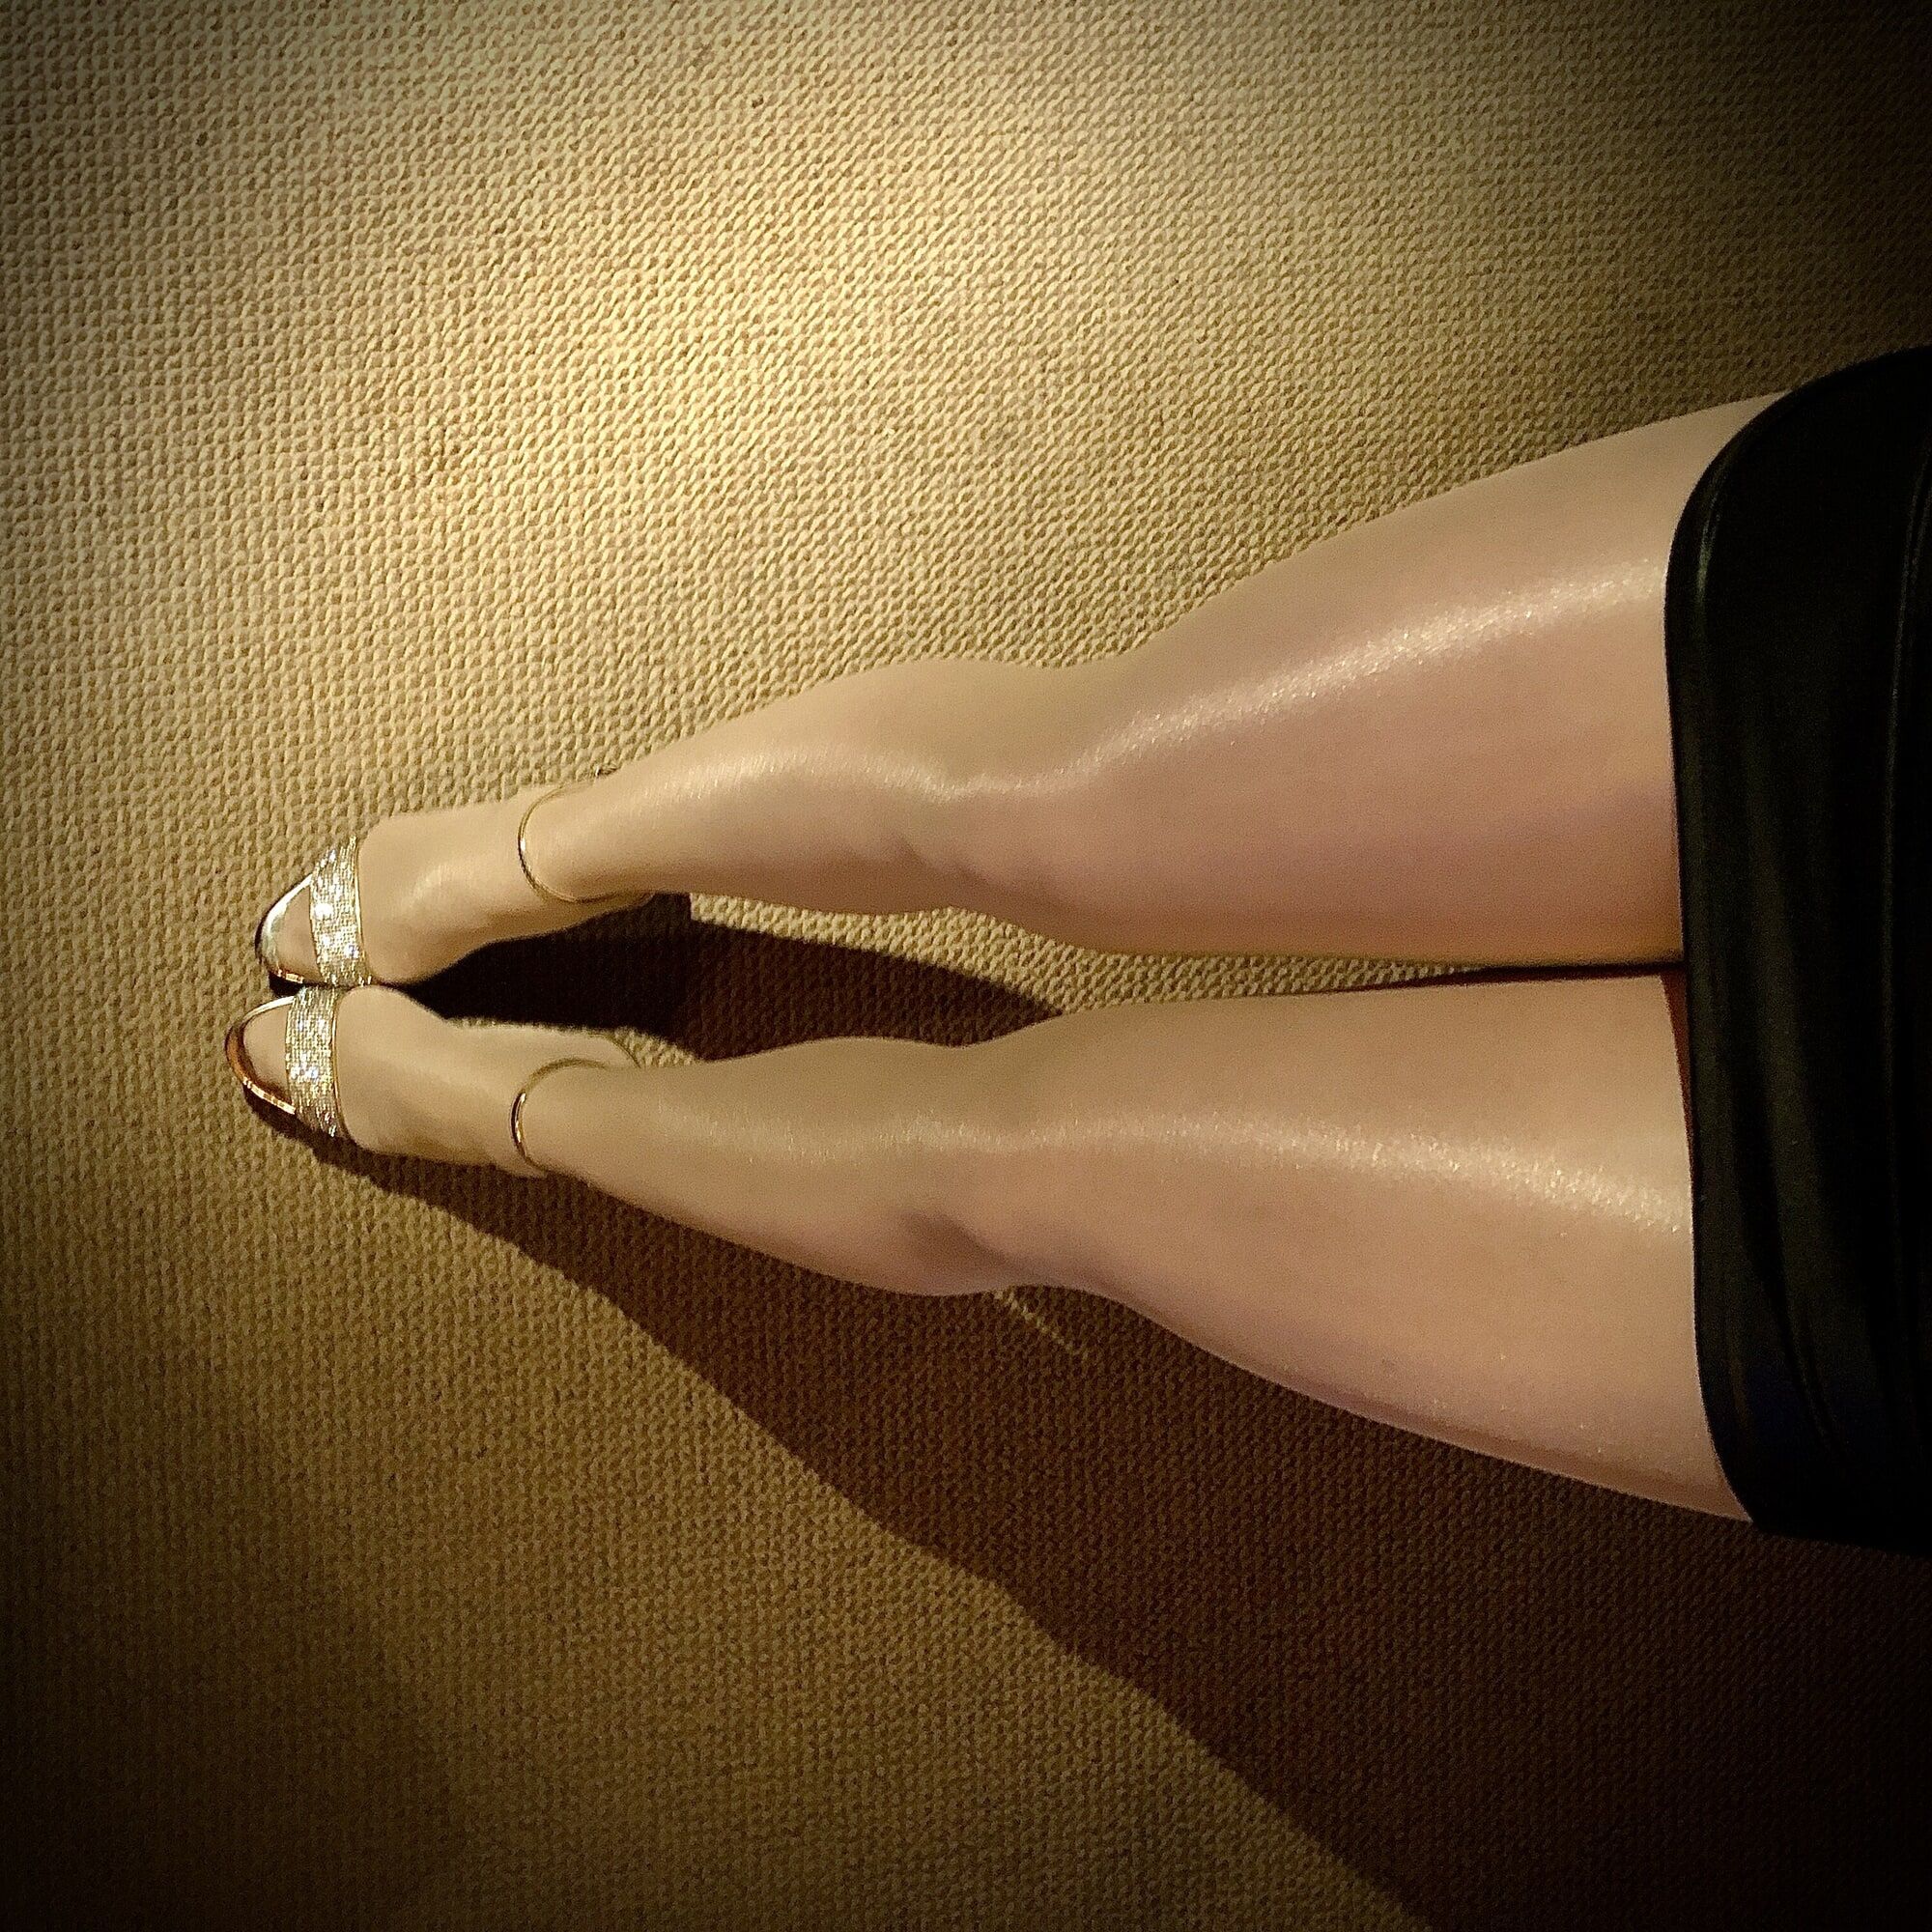 My legs on shiny pantyhose! #20